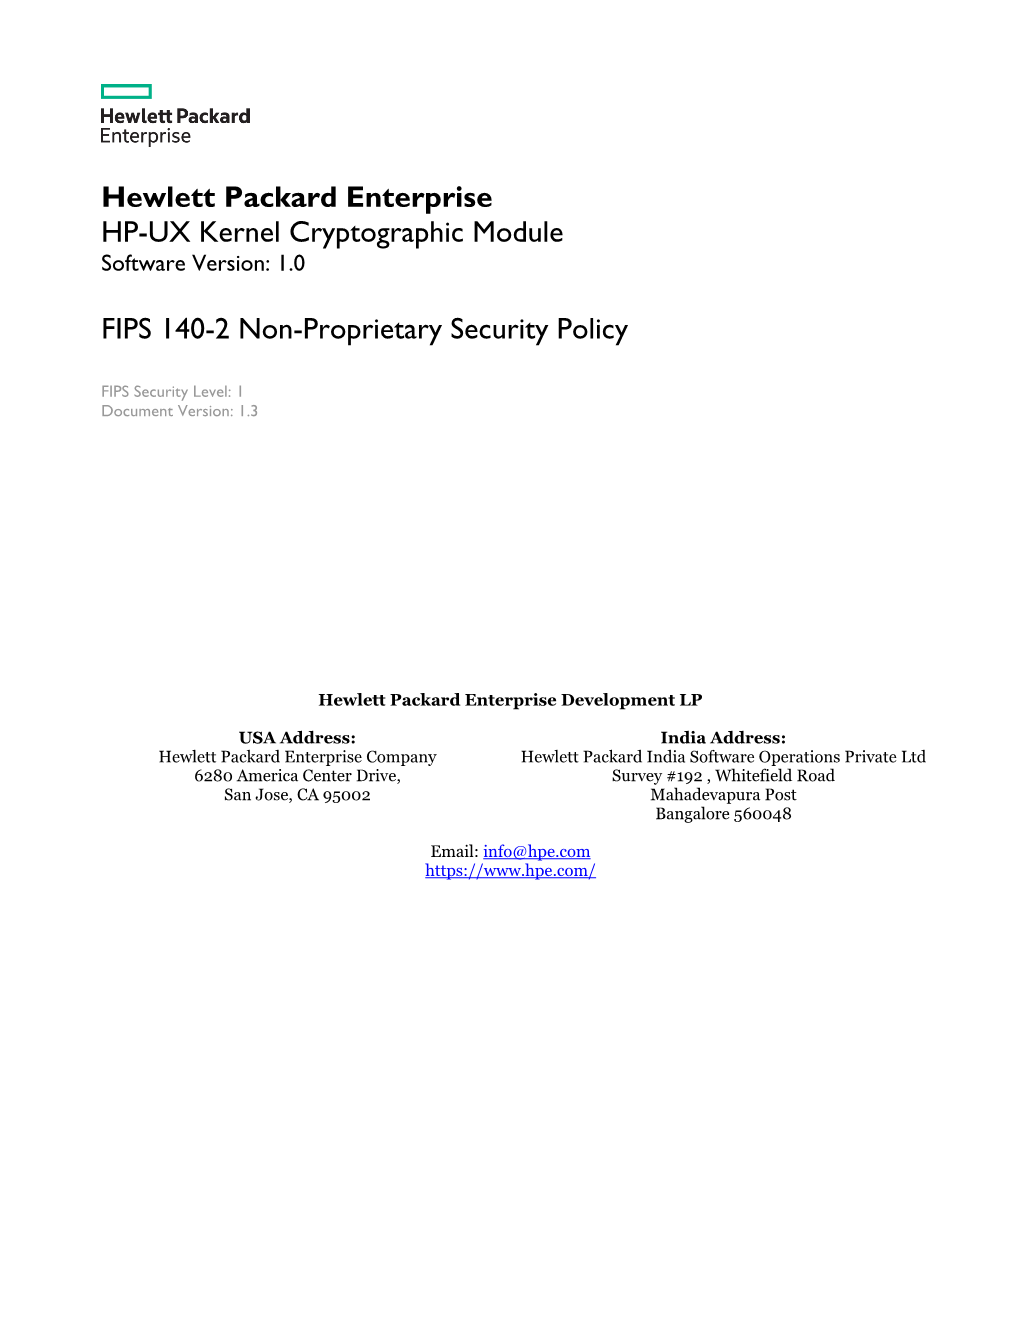 Hewlett Packard Enterprise HP-UX Kernel Cryptographic Module FIPS